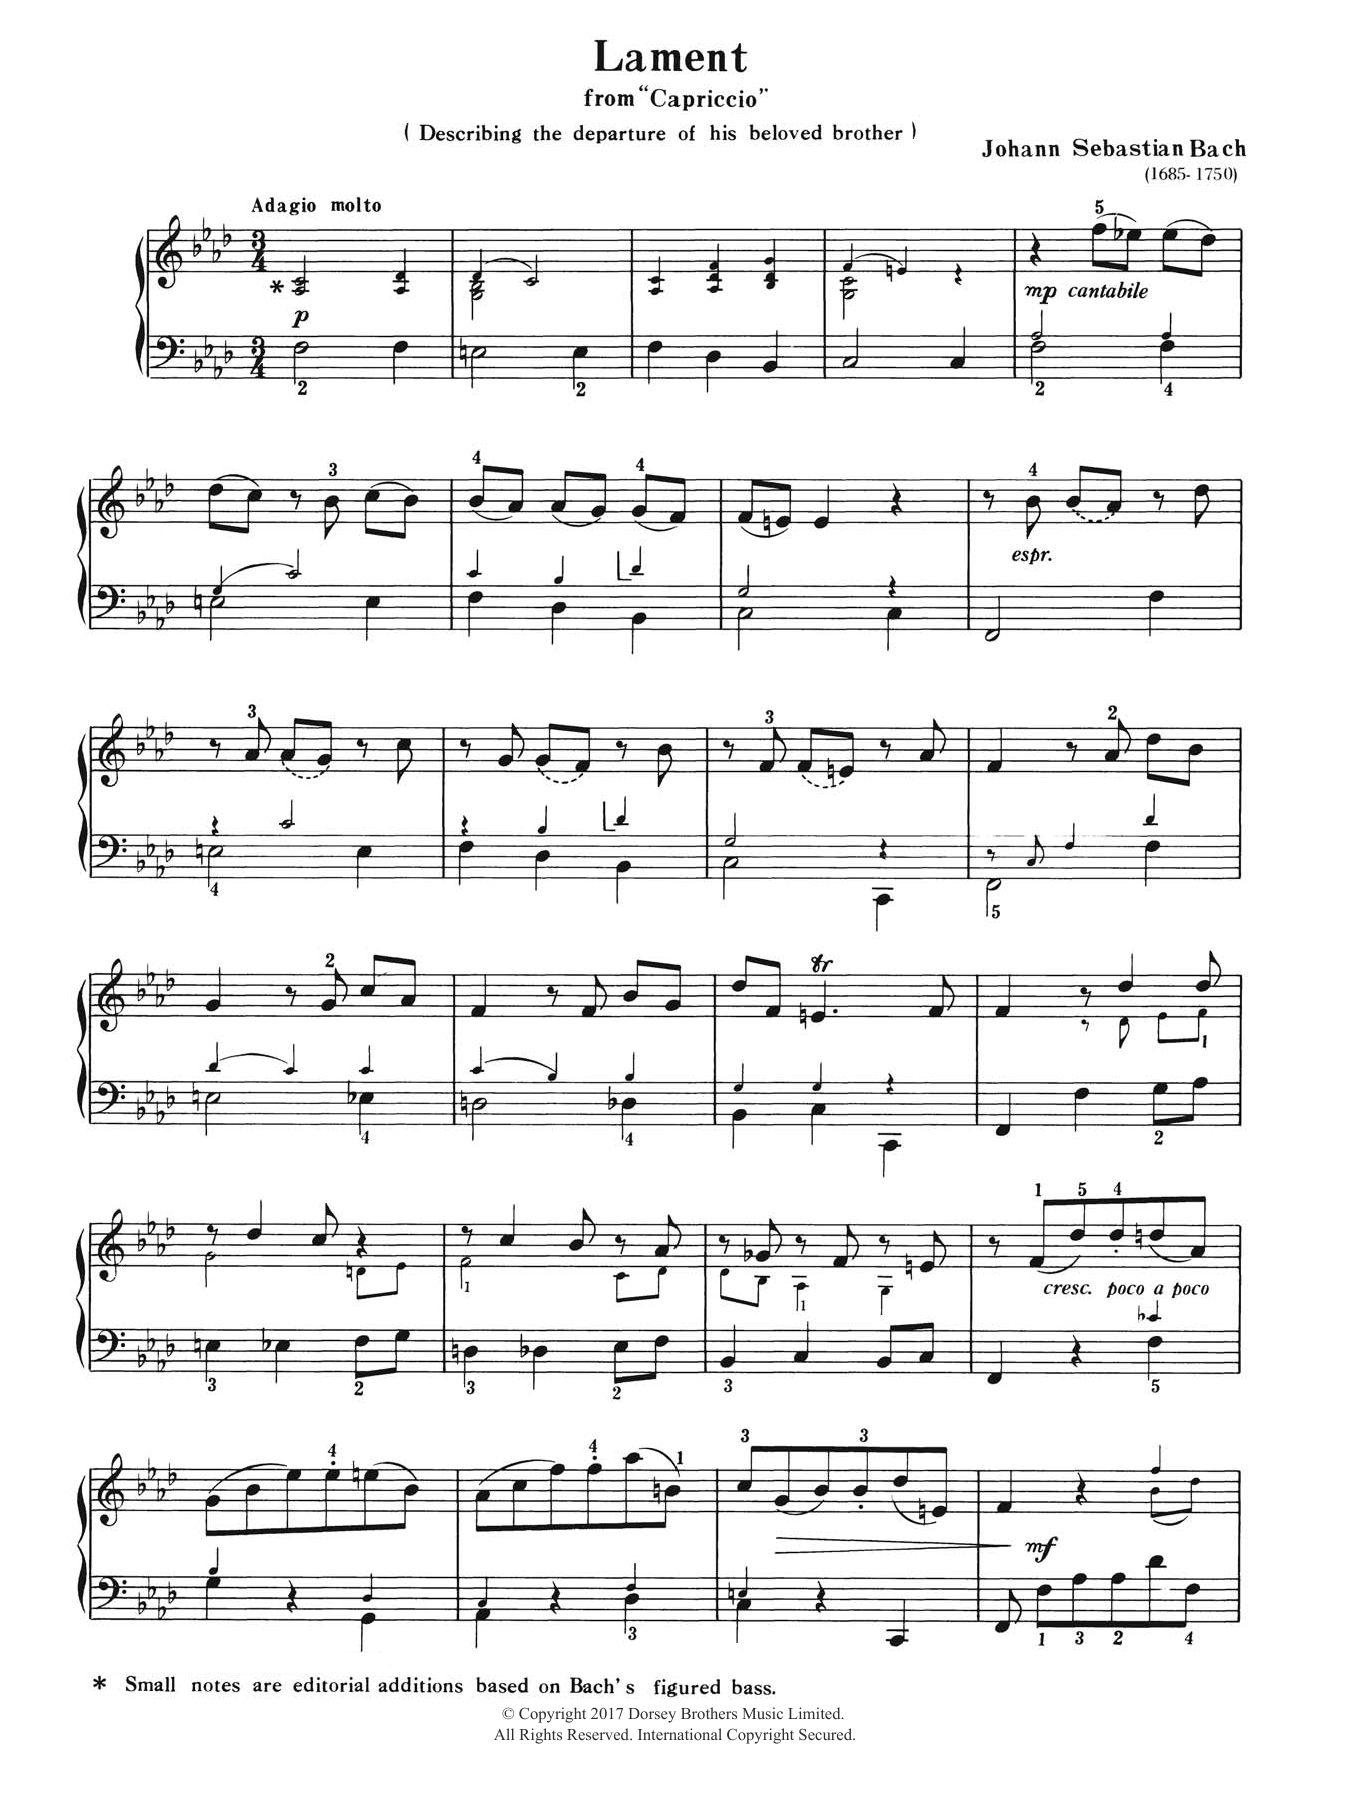 Johann Sebastian Bach Lament (from Capriccio) sheet music notes and chords arranged for Piano Solo